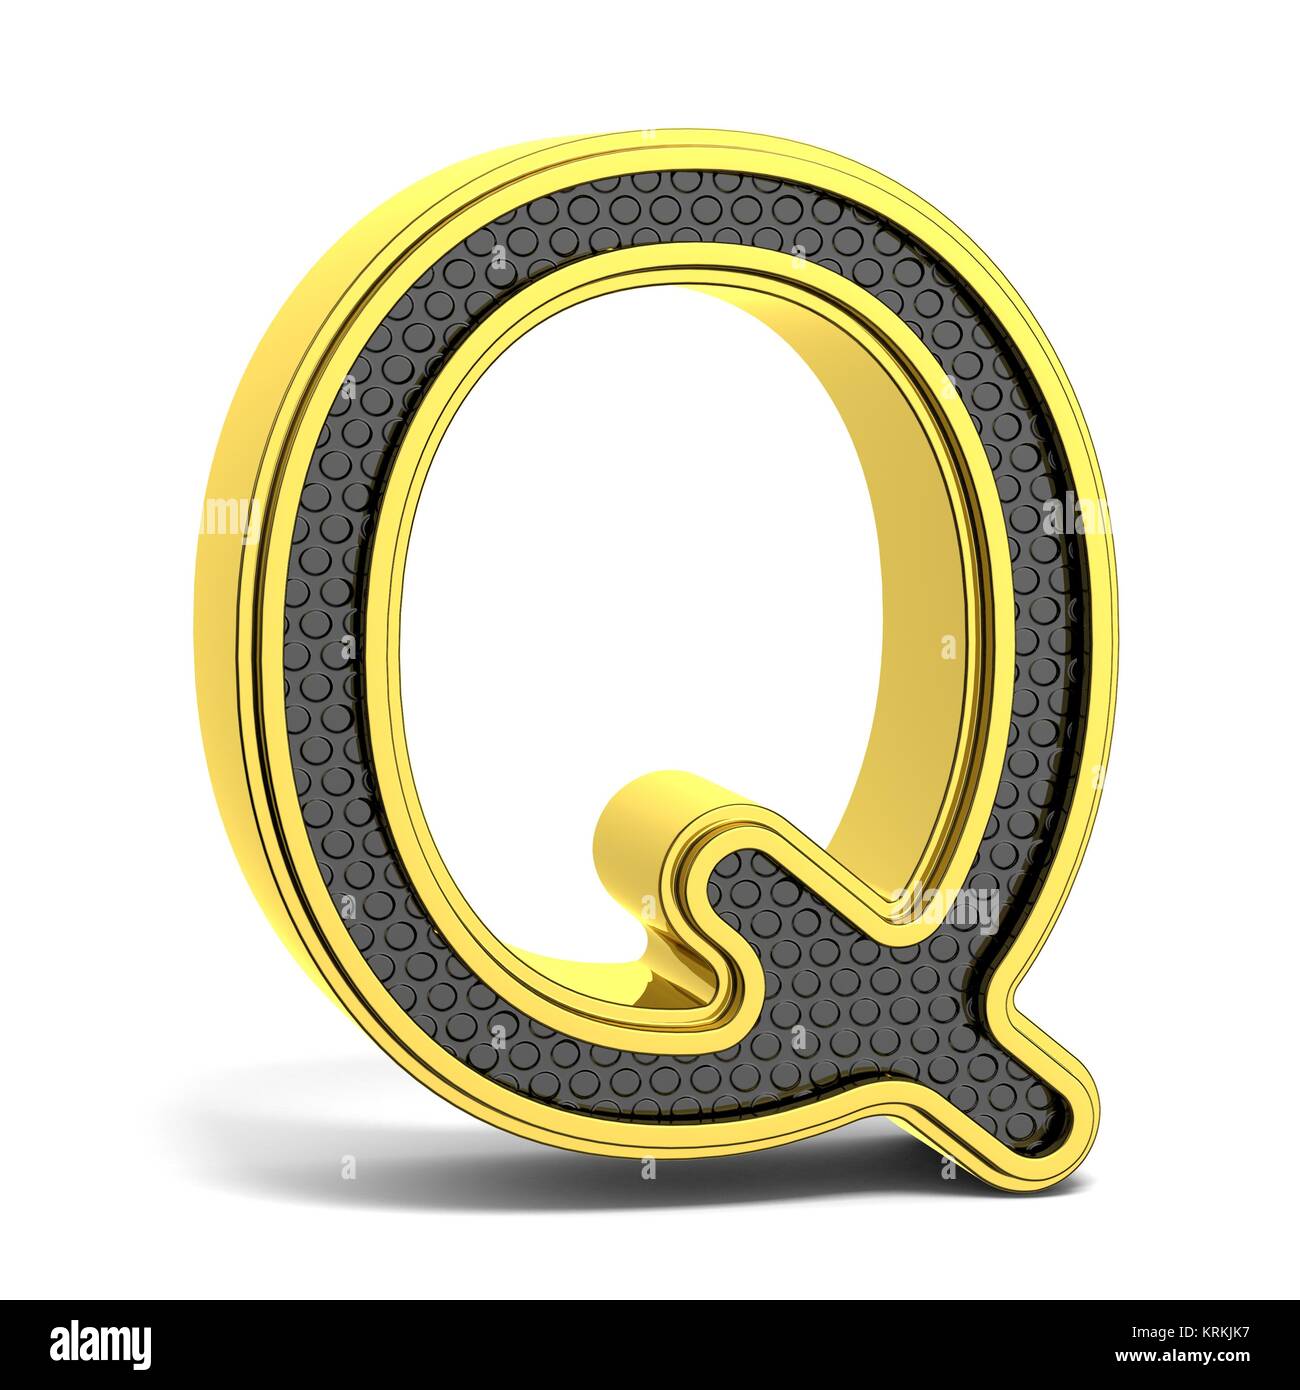 Golden and black round alphabet. Letter Q. 3D Stock Photo